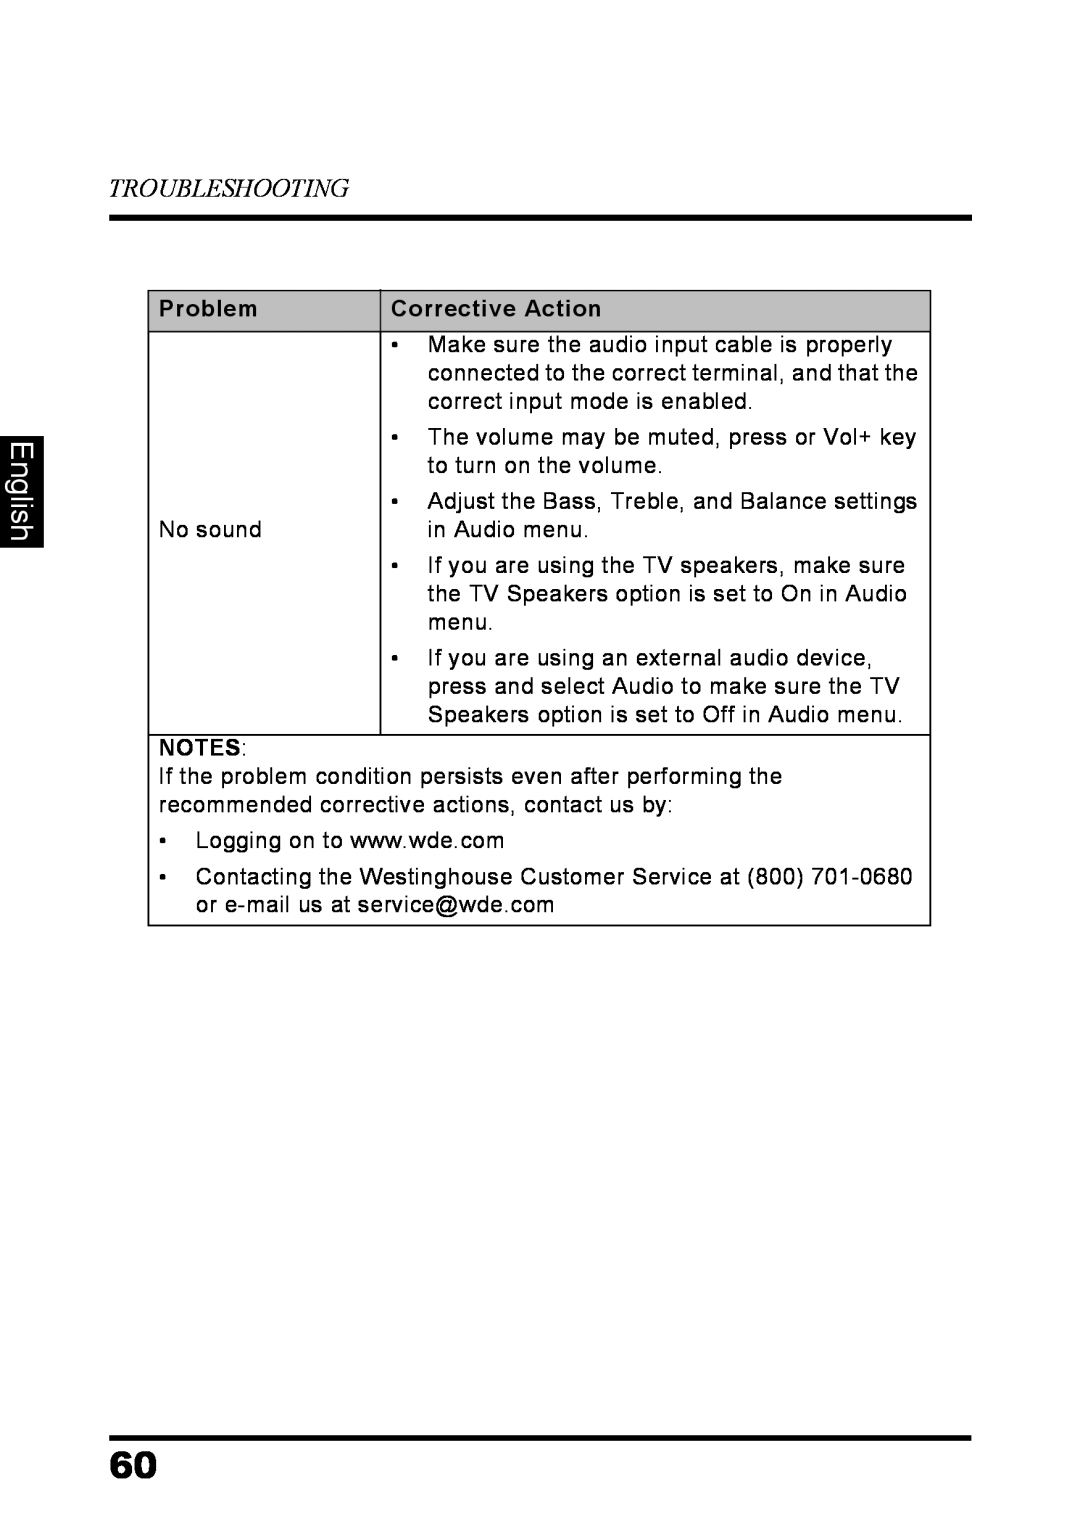 Westinghouse LD-3237 user manual English, Troubleshooting 